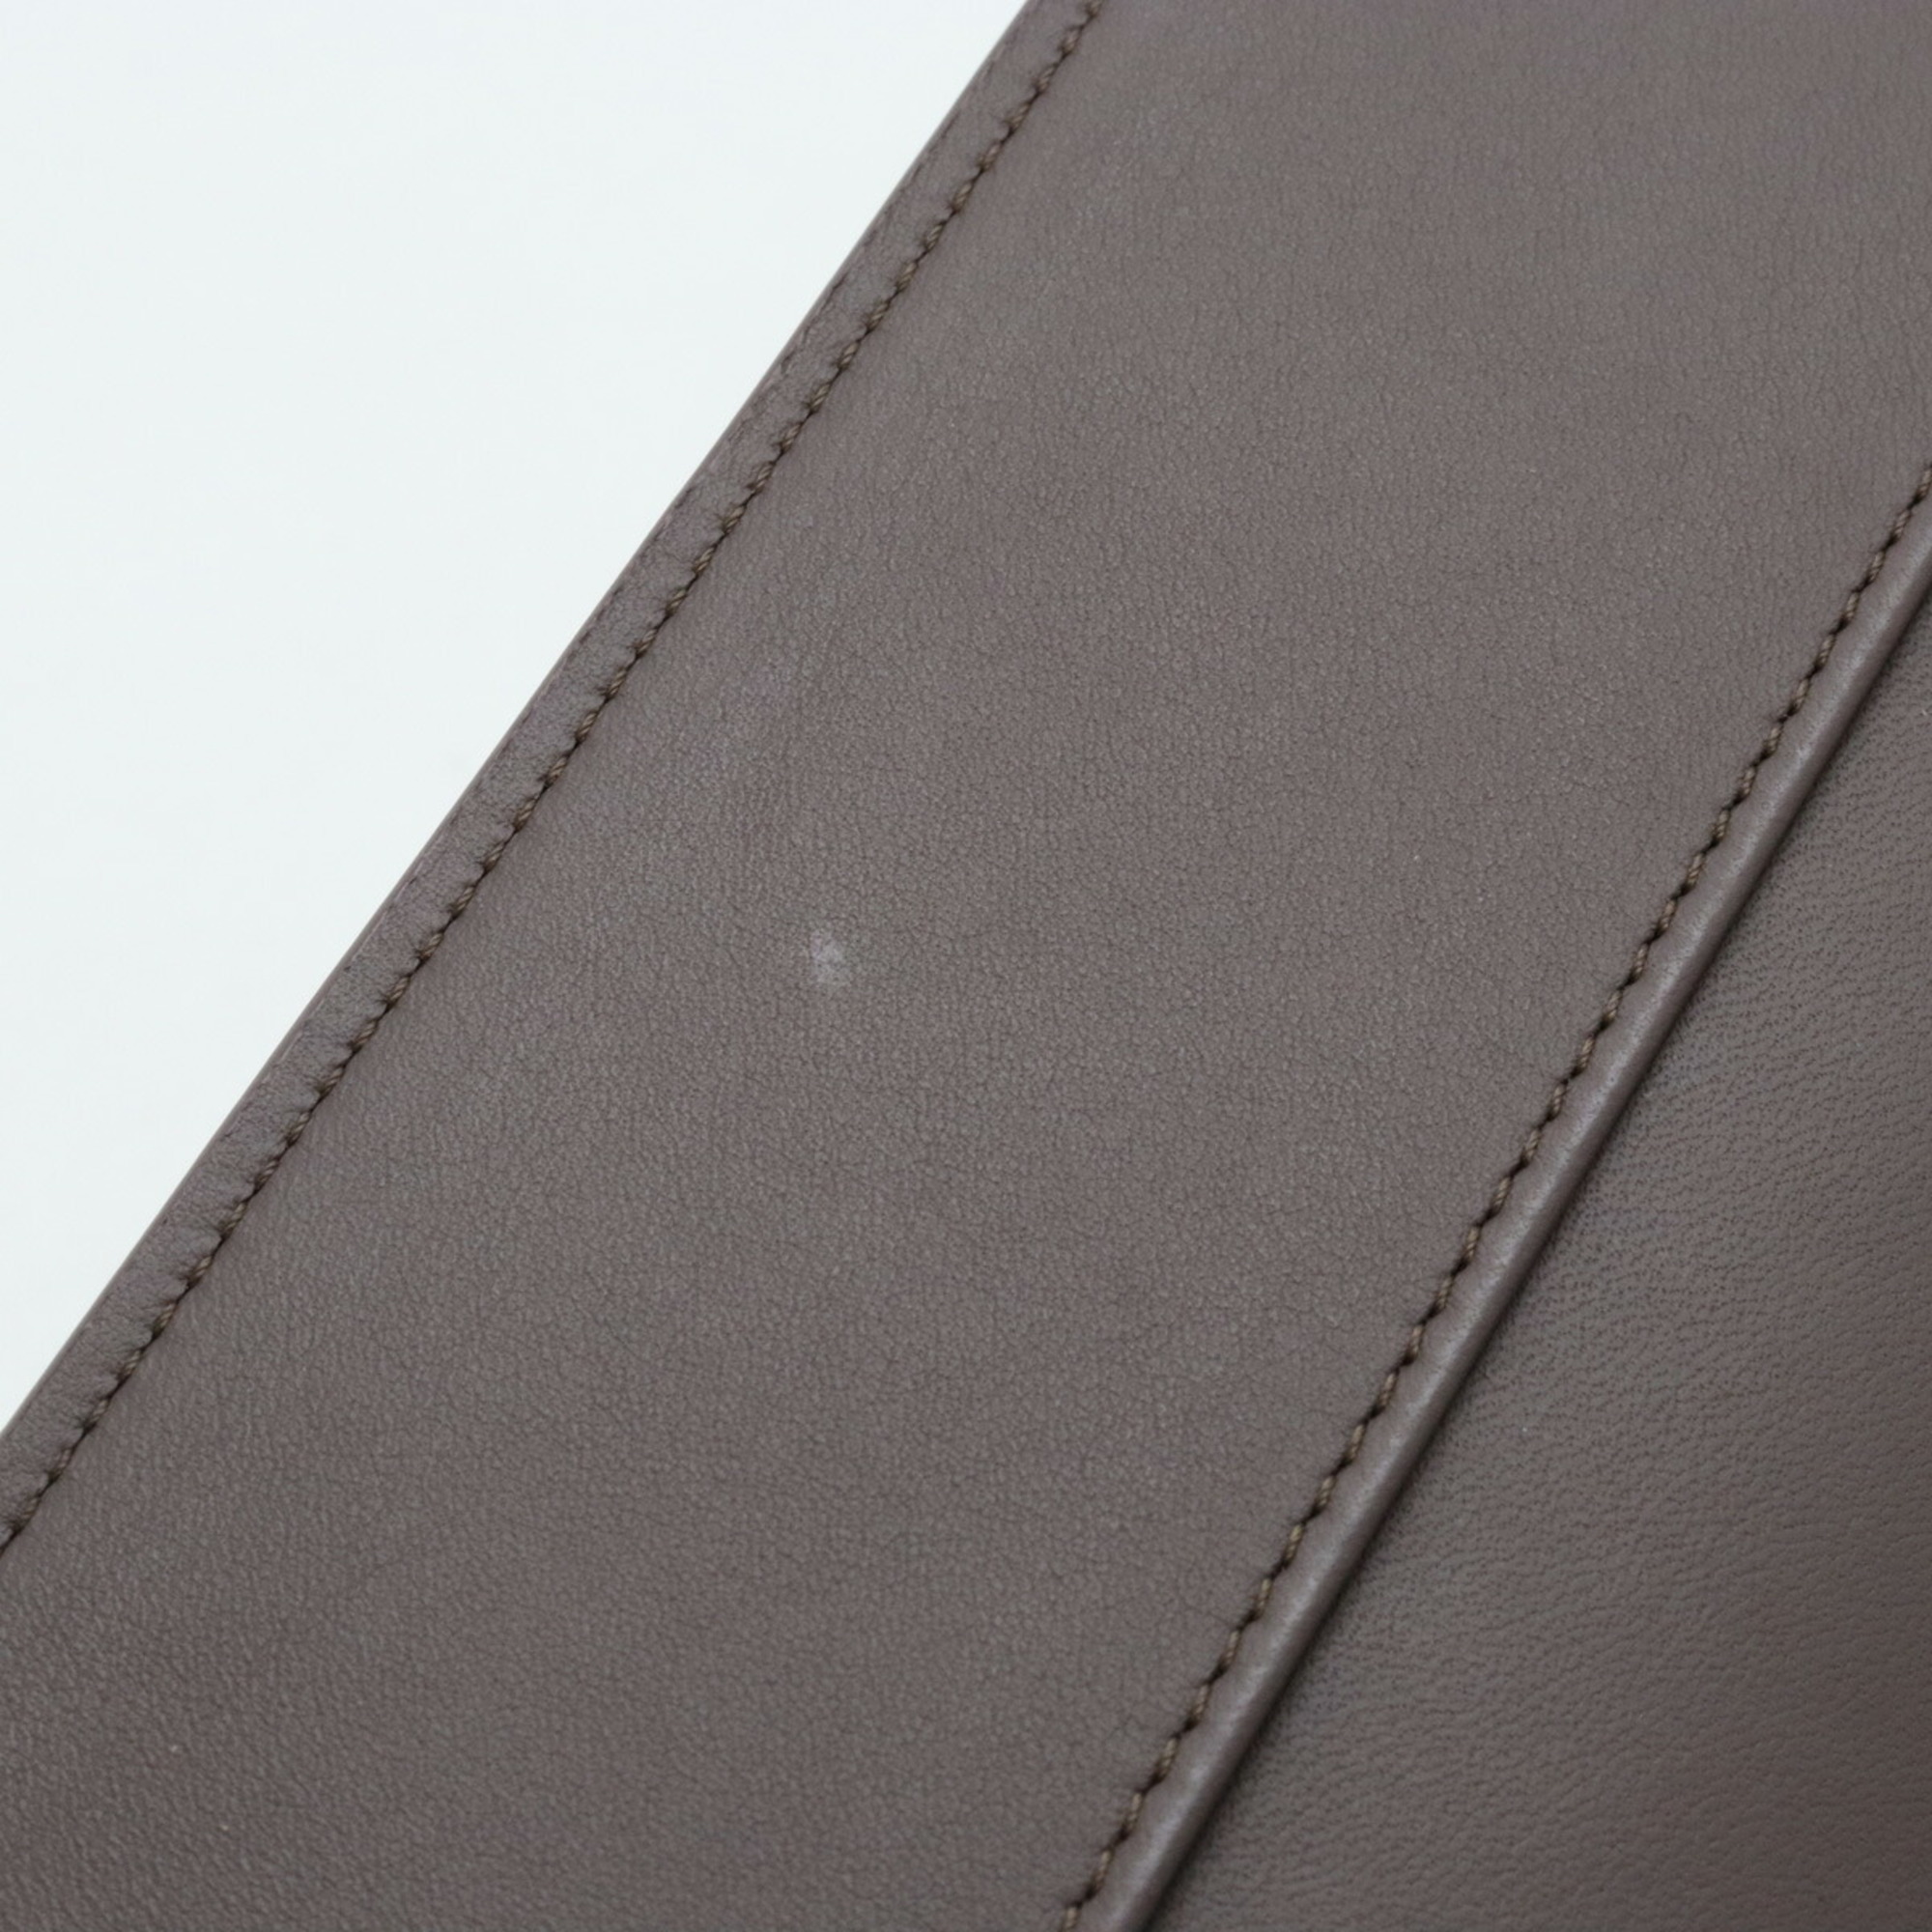 LOUIS VUITTON Louis Vuitton Monogram Book Cover Clemence Notebook Planner Grain Leather Chocolate Dark Brown GI0632